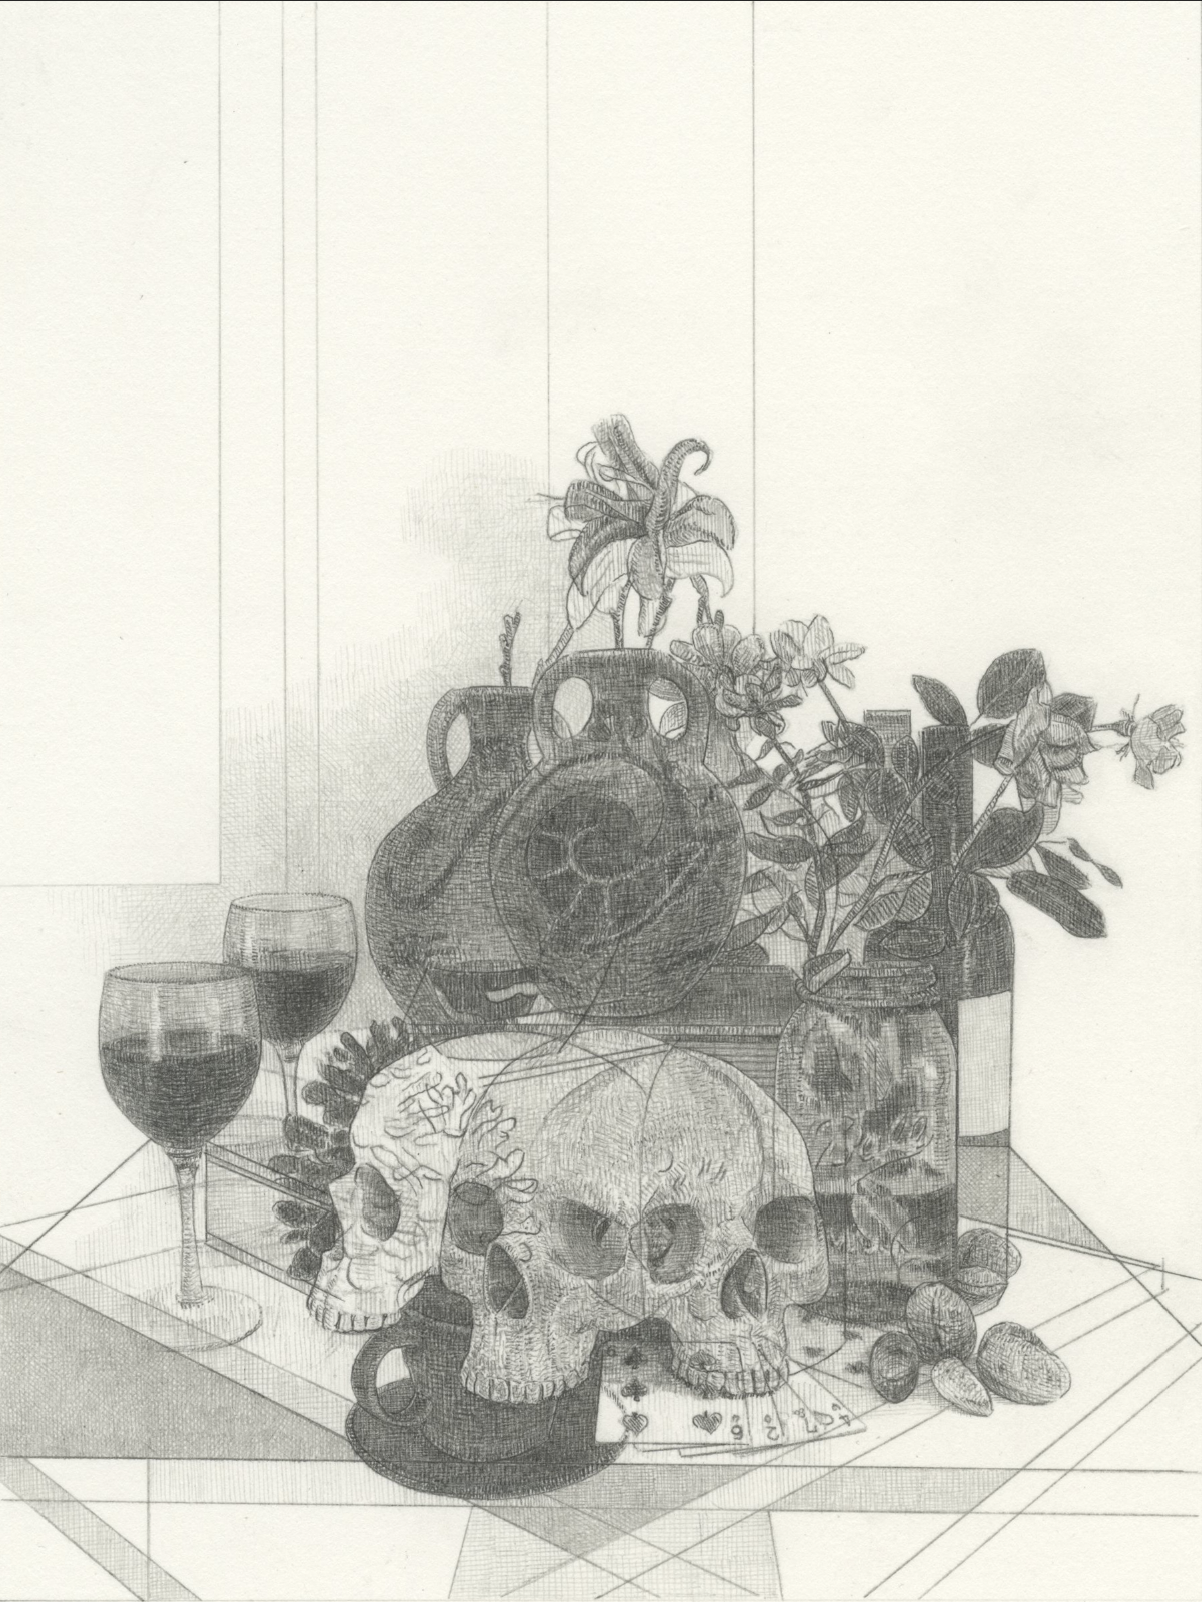   Untitled Still Life (8-2019)   graphite on paper  8x6”  2019 